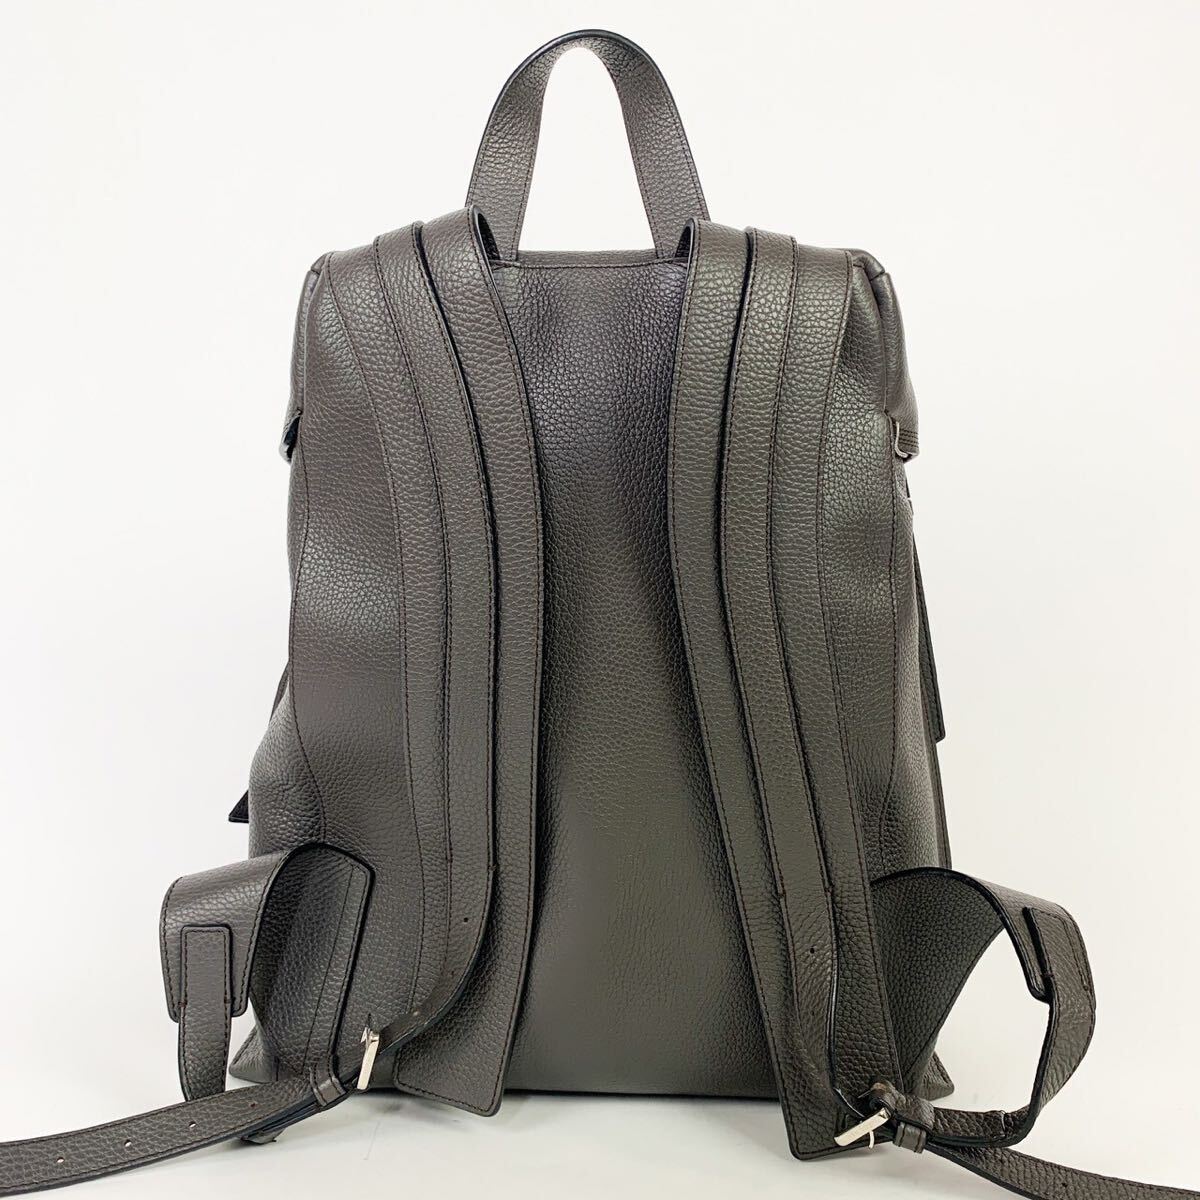 1 jpy * beautiful goods * LOEWE Loewe / rucksack /T backpack small /k loud ( light gray )/ leather backpack hole gram Logo 